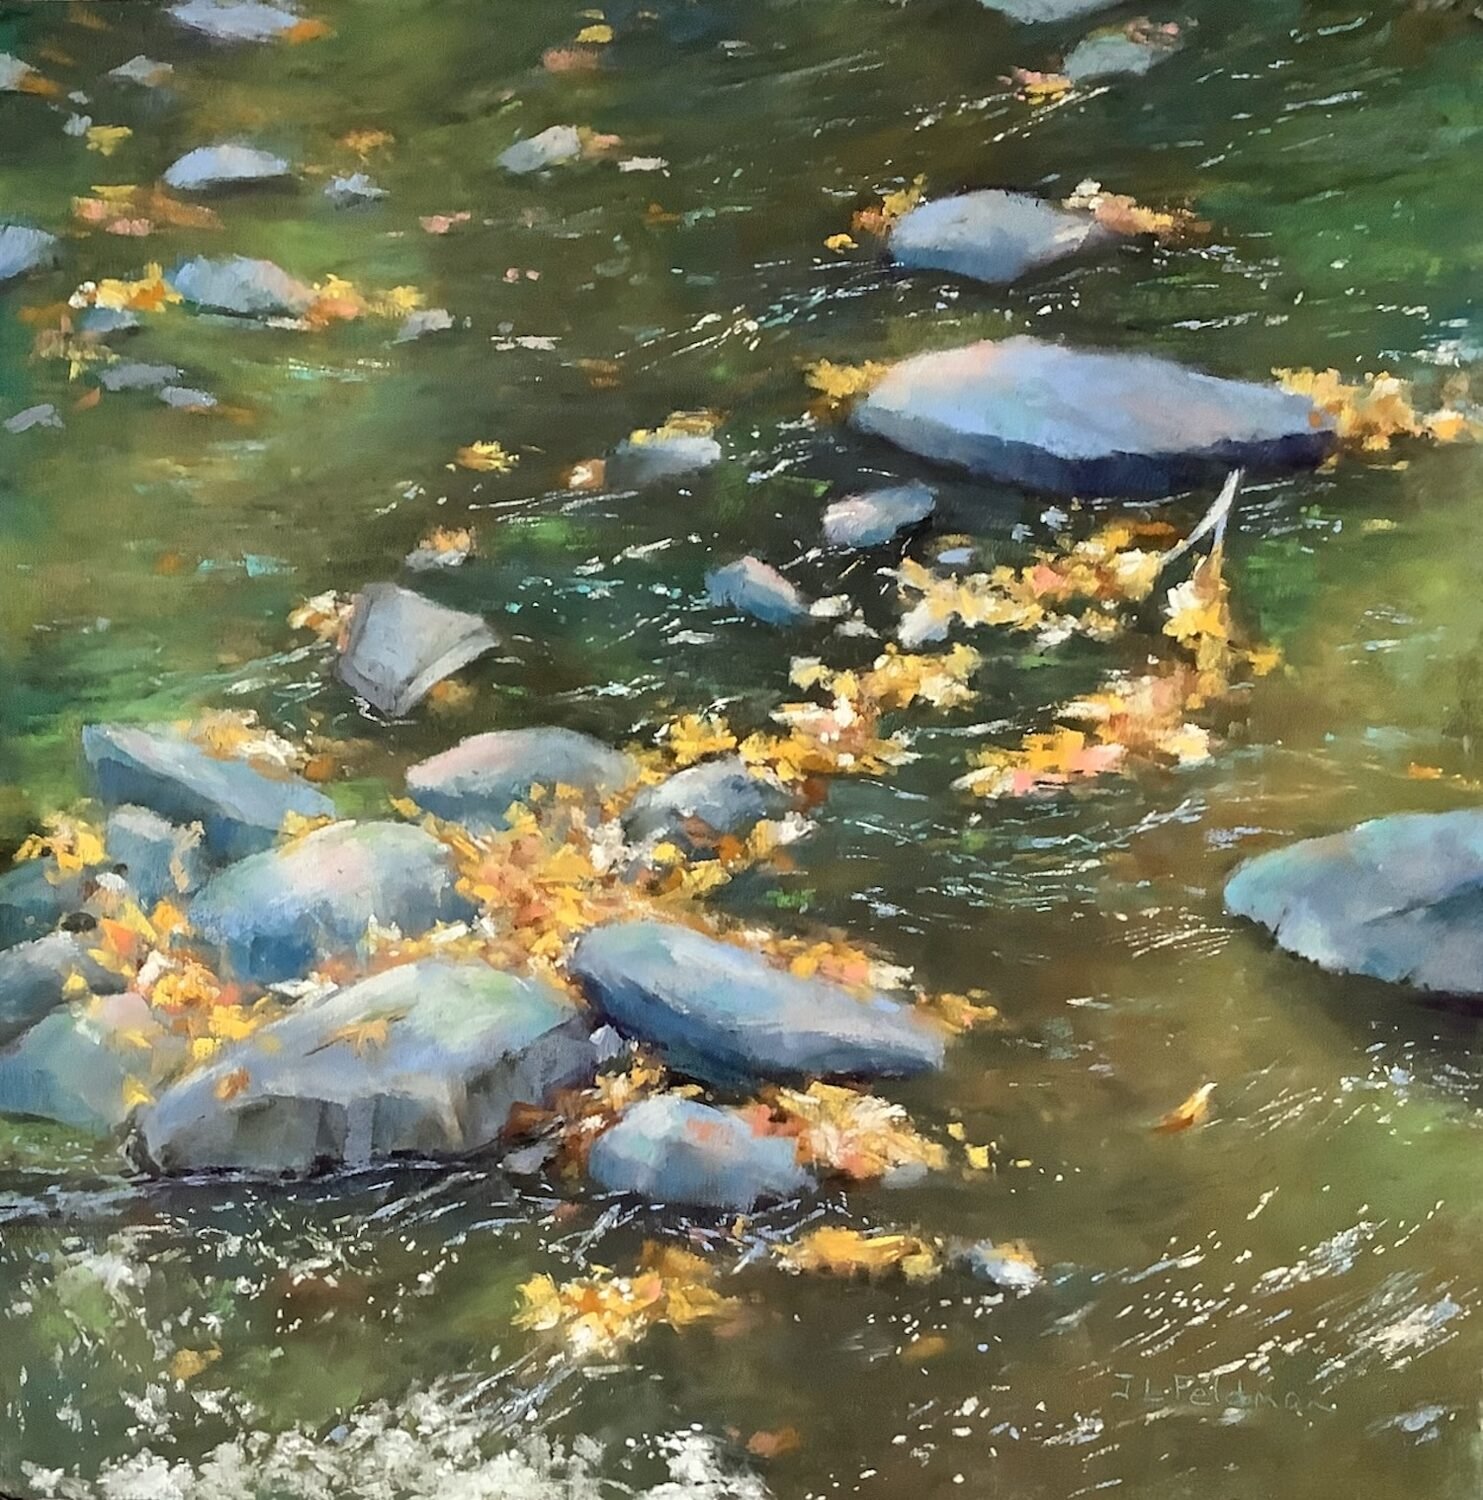 Autumn Leaves in the Nubanusit River, by Joelle Feldman